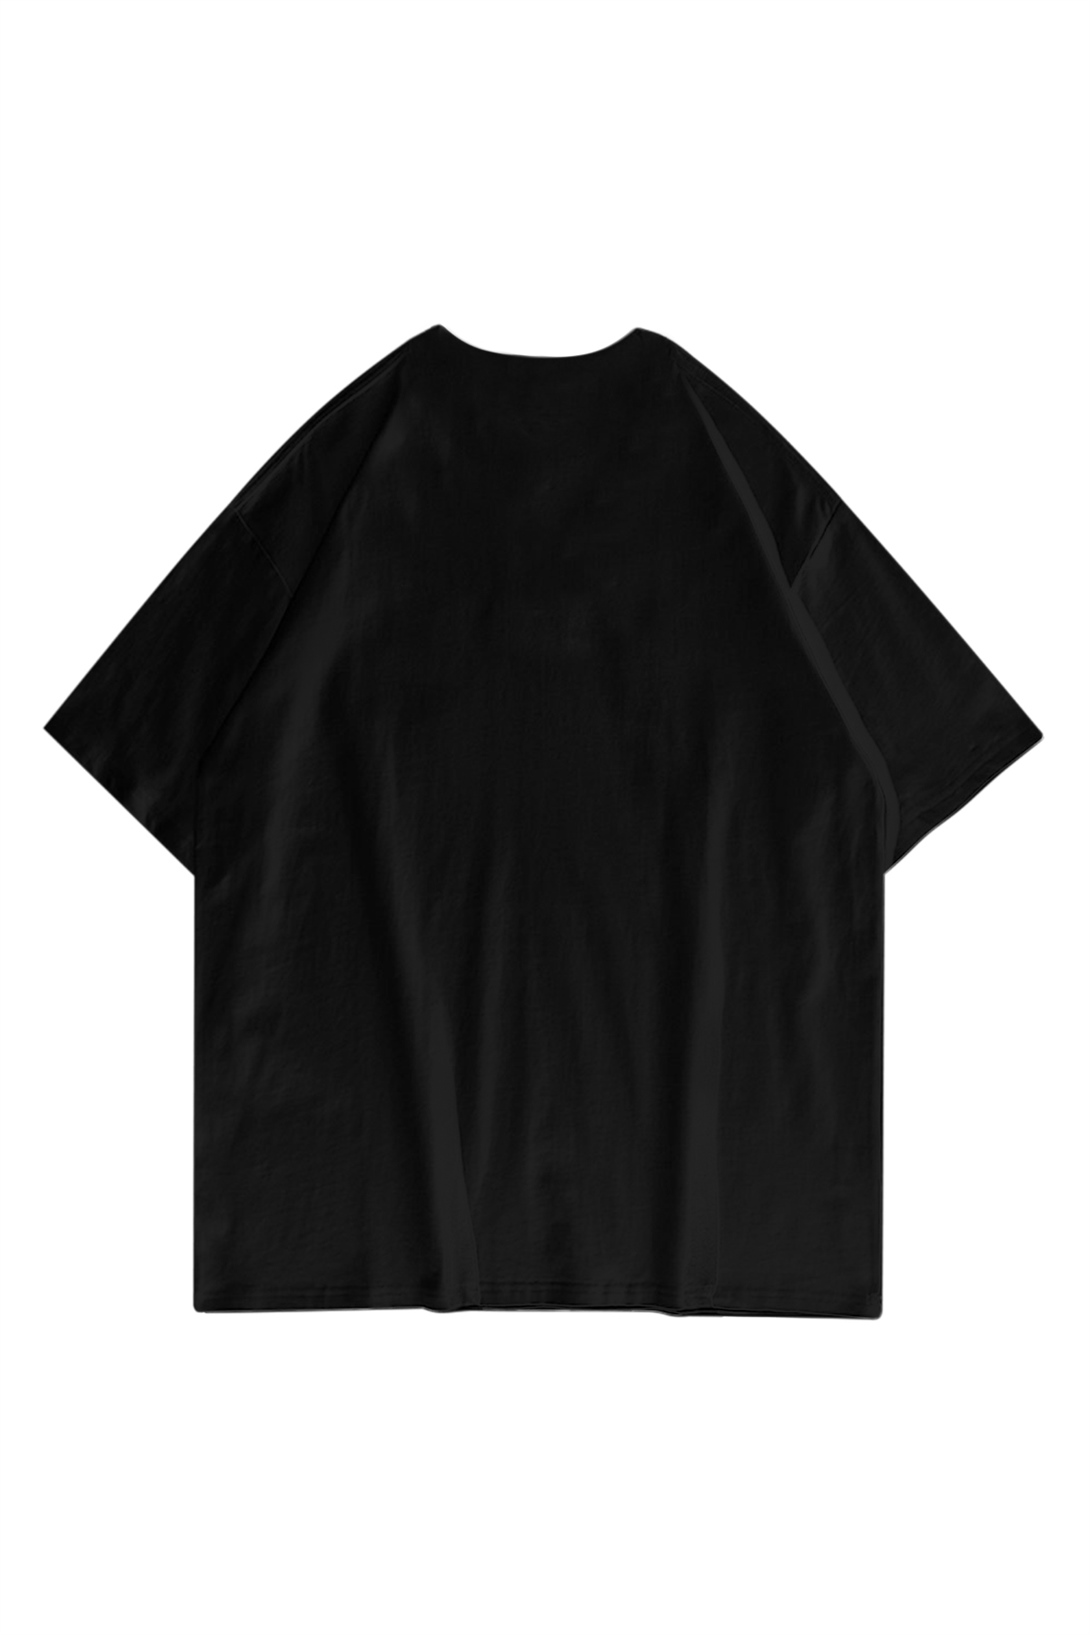 Trendiz Unisex Essentials 303 Siyah Tshirt